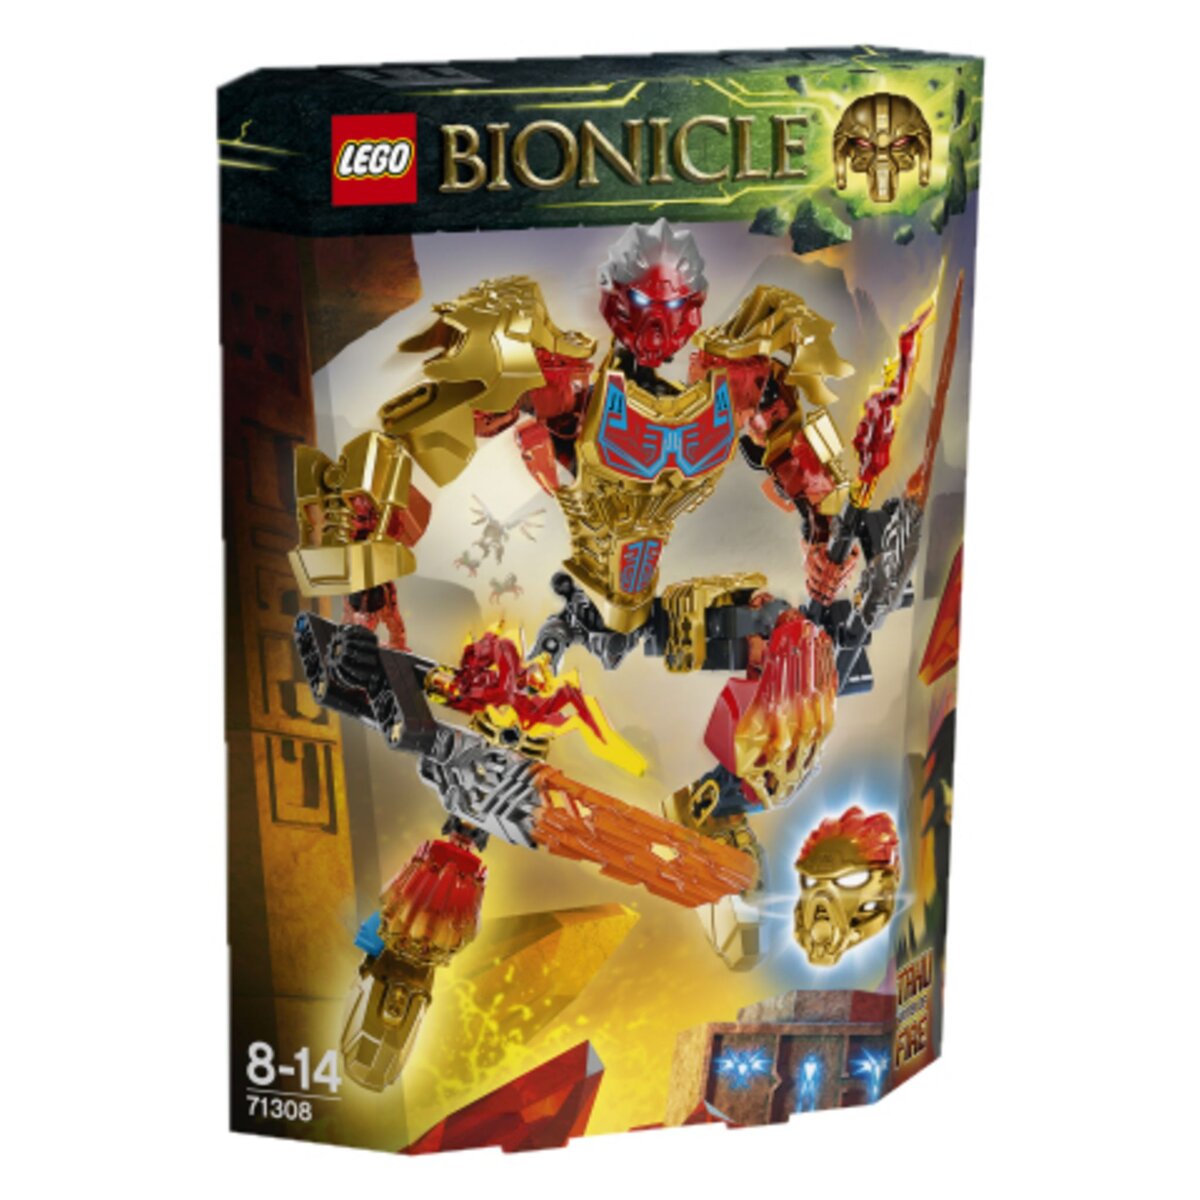 LEGO Bionicle 71308 - Tahu Unificateur du Feu